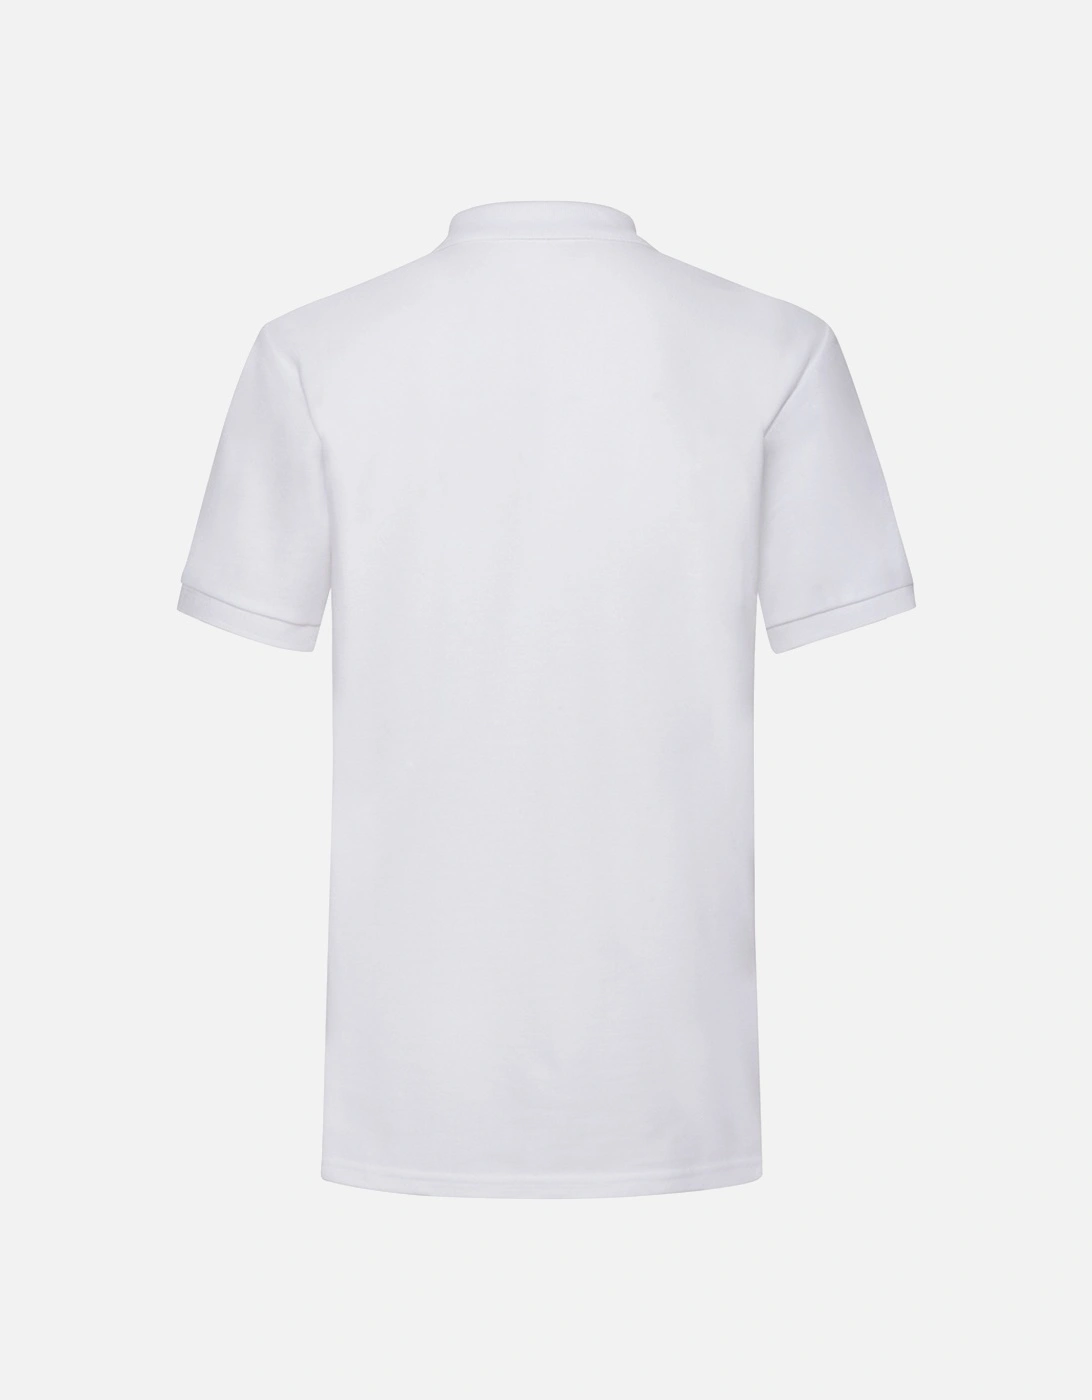 Mens 65/35 Heavyweight Pique Short Sleeve Polo Shirt